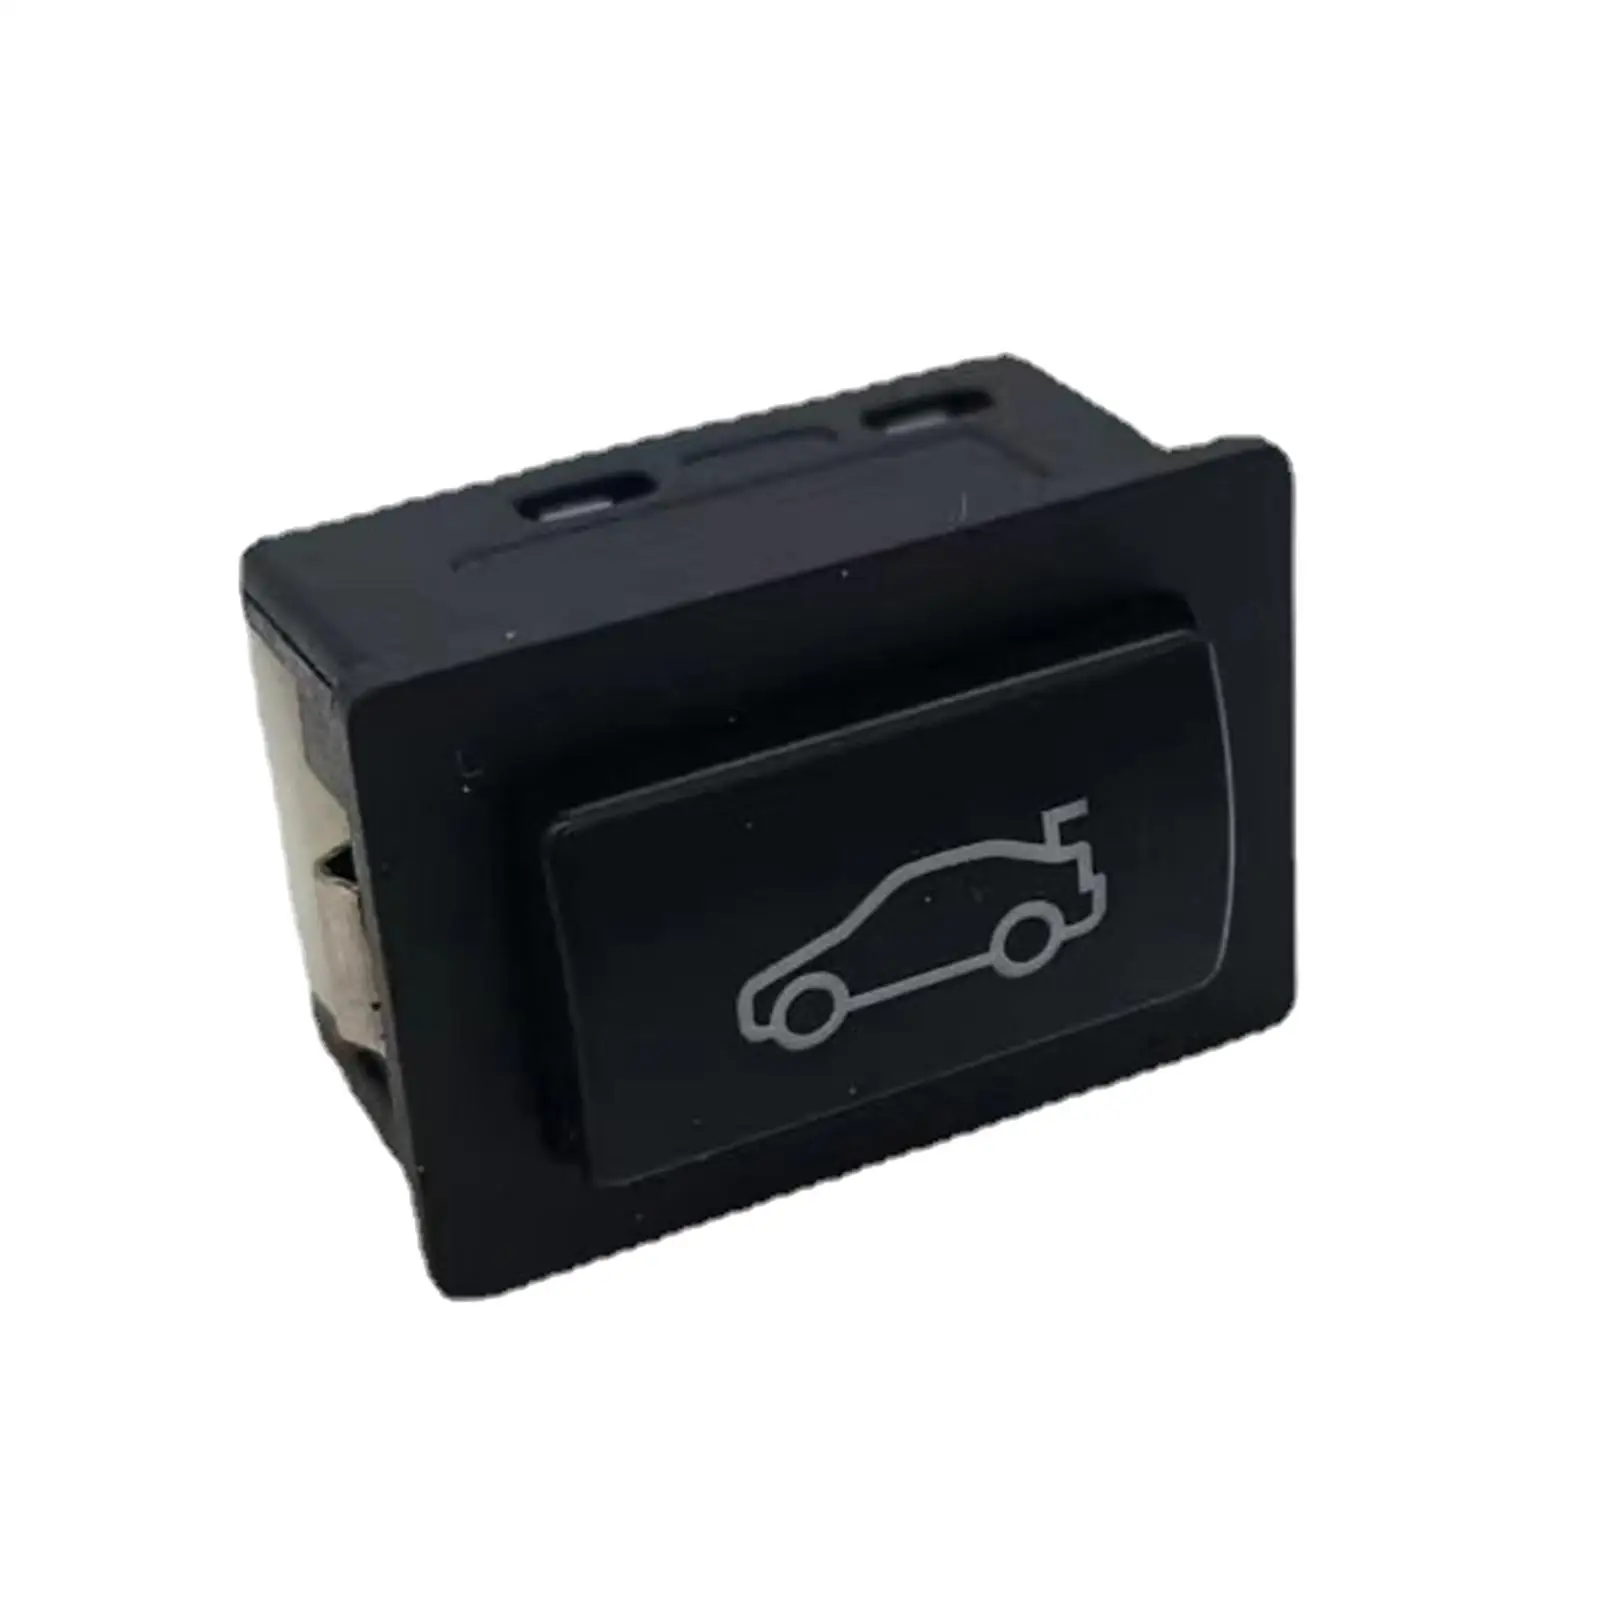 Heckklappen-Kofferraum-Schalter knopf 61319200316 Entriegelung knopf für  Kofferraum verriegelung schalter für BMW E90 E91 E92 E93 x1 x3 Z4 -  AliExpress